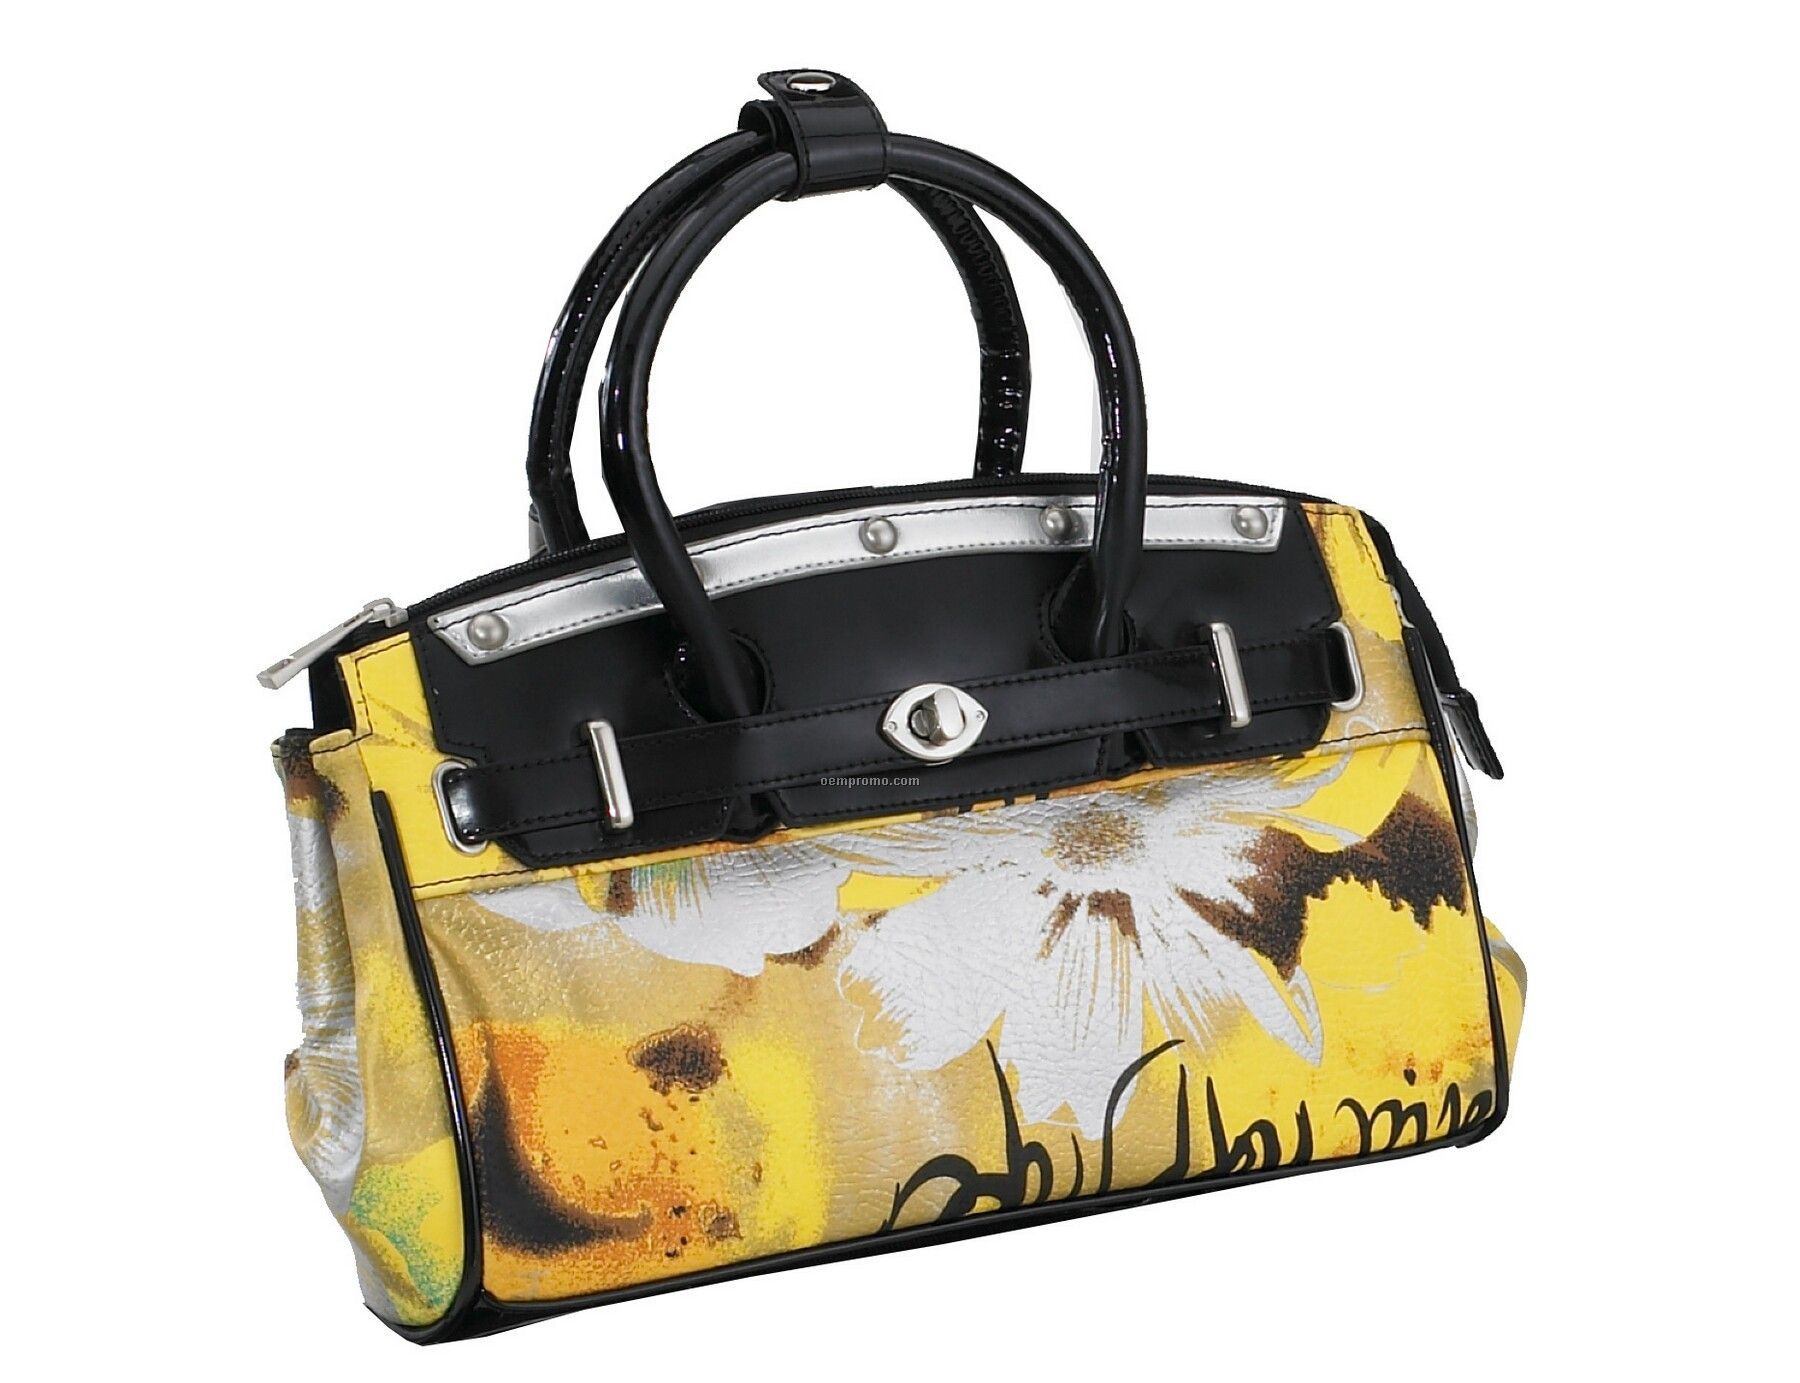 Matching Tote Bag - Yellow Floral Pattern